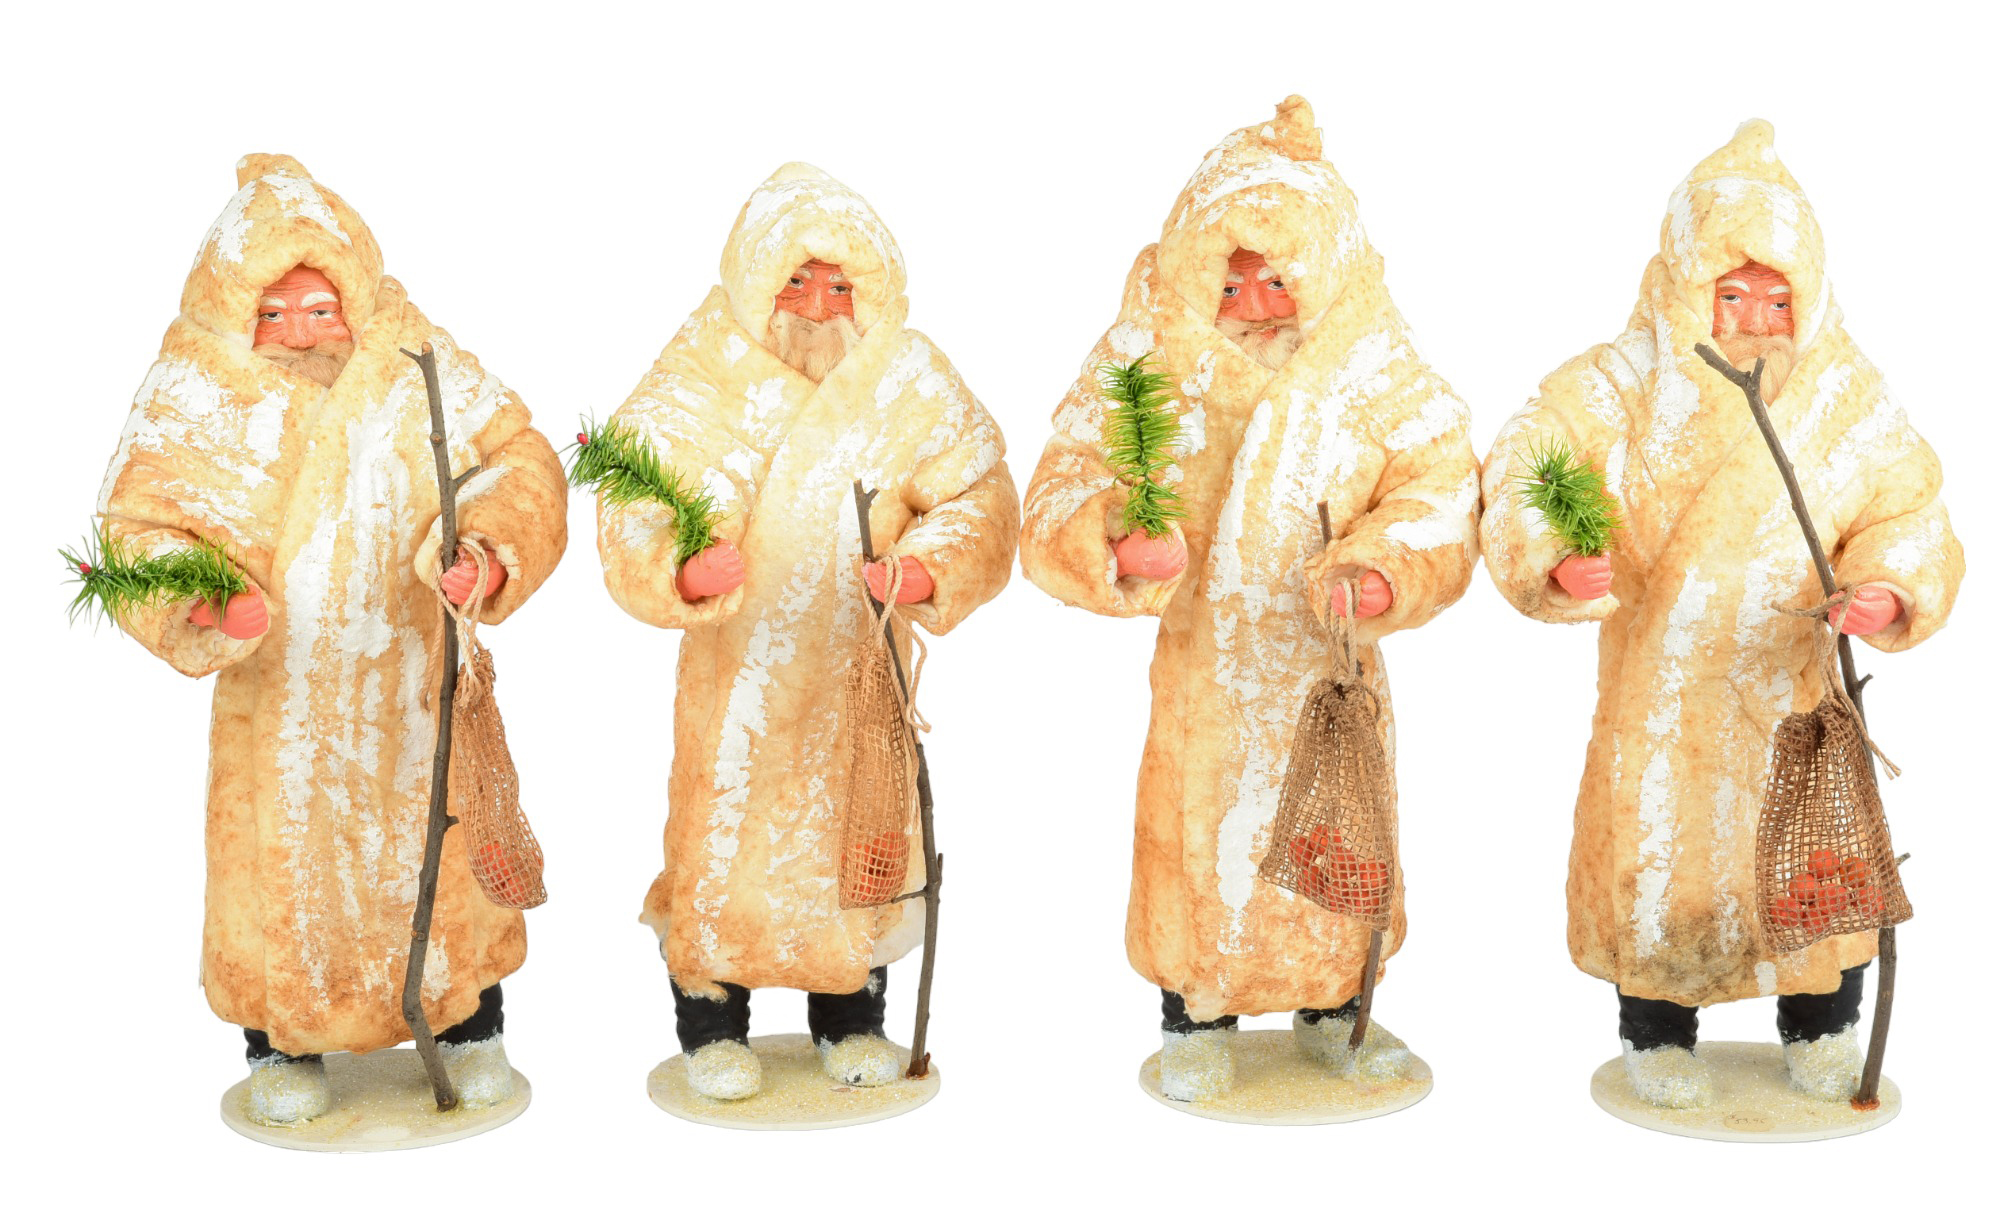  4 Antique style santa figures  3c682b